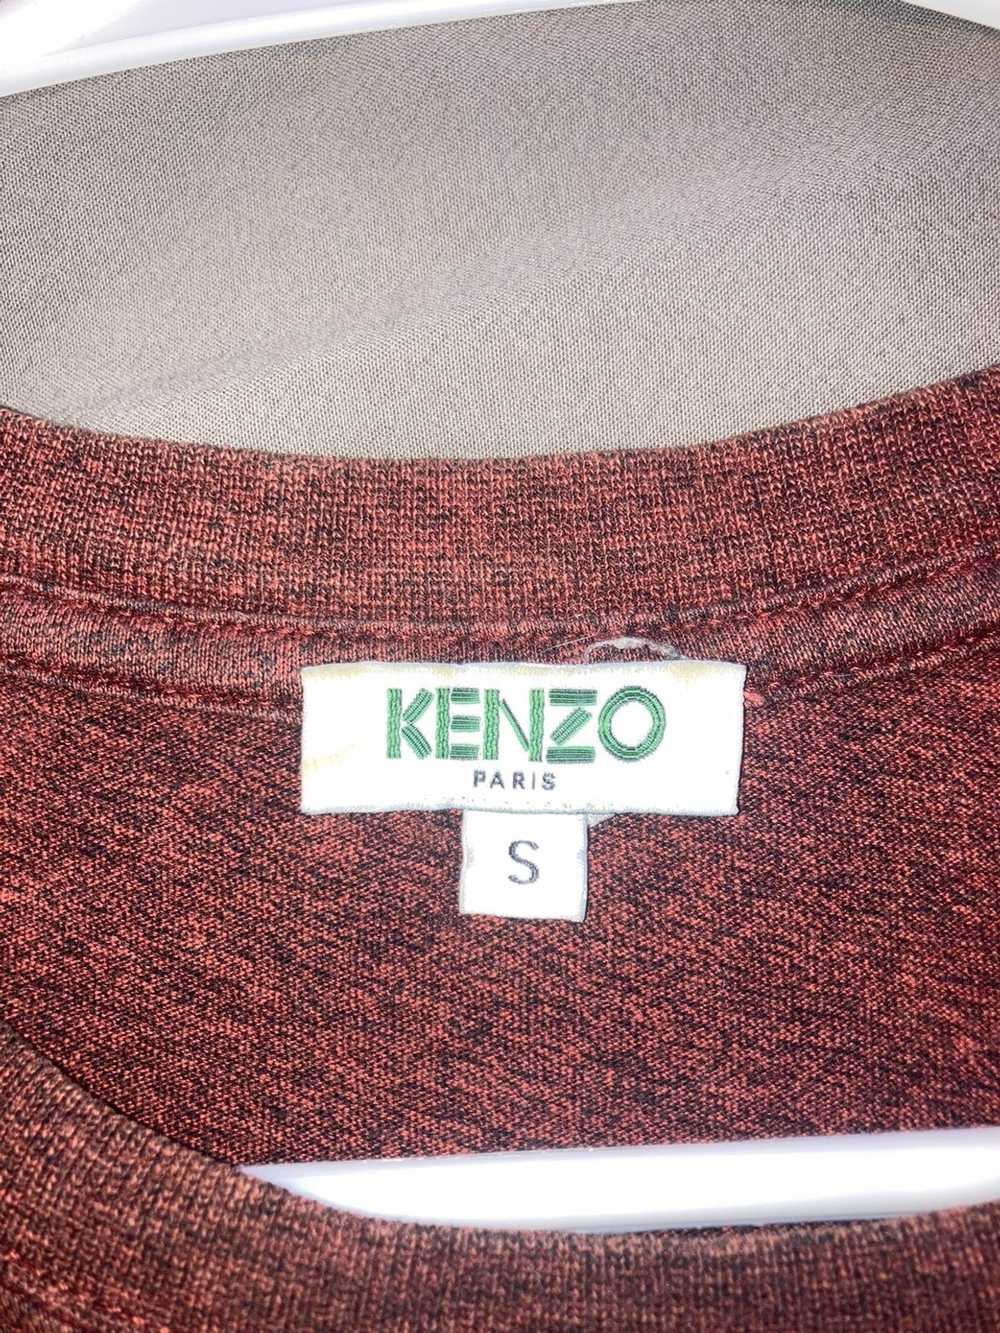 Kenzo Kenzo Tiger T-Shirt - image 5